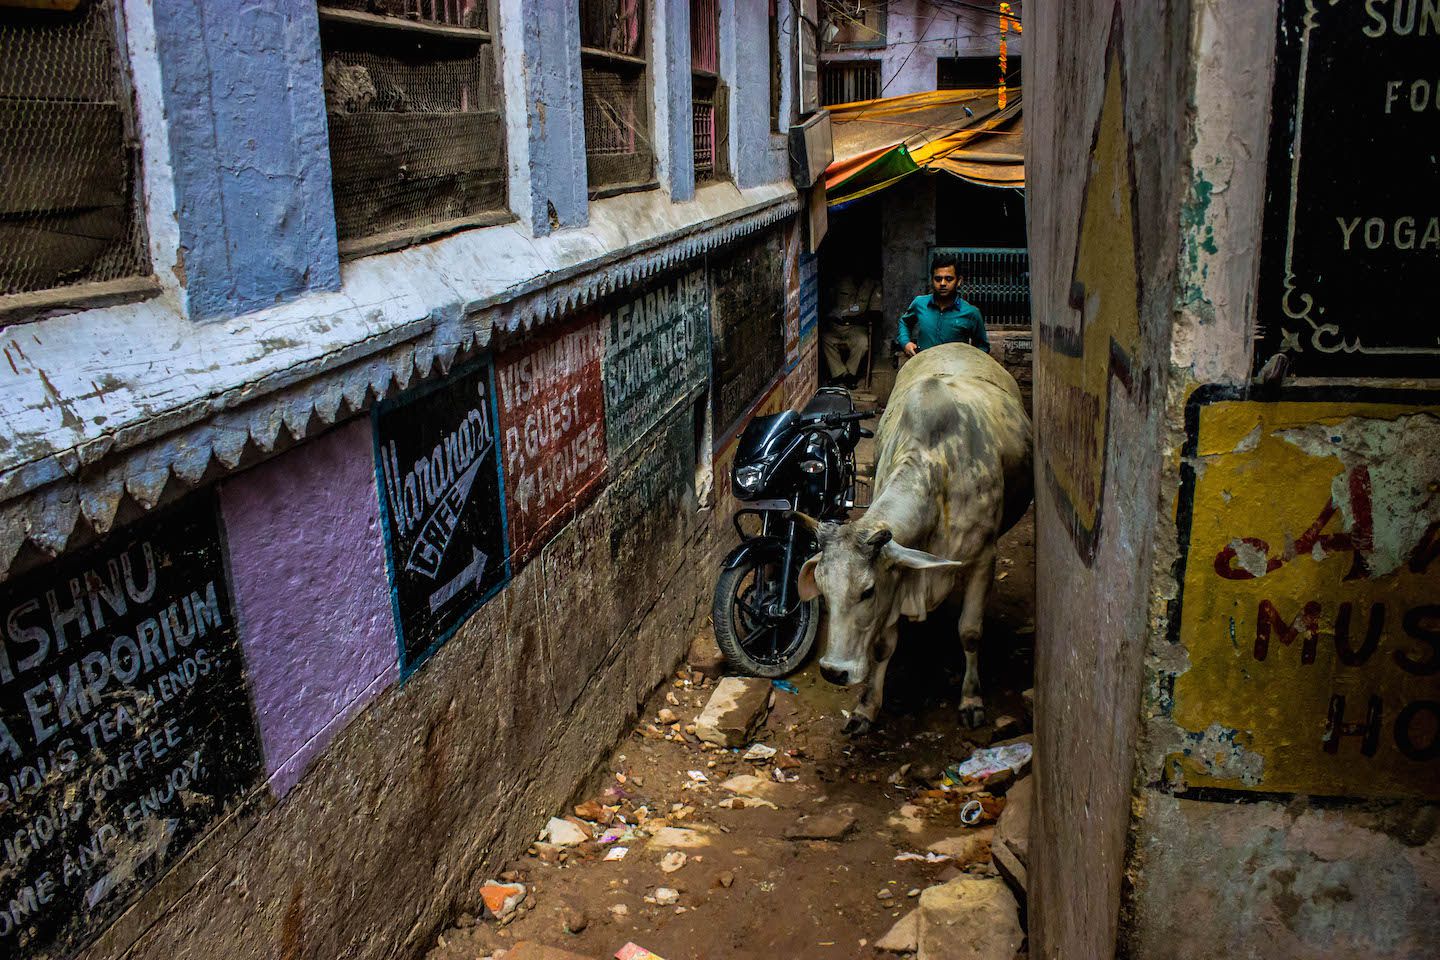 Narrow alleys with cows, Varanasi, India